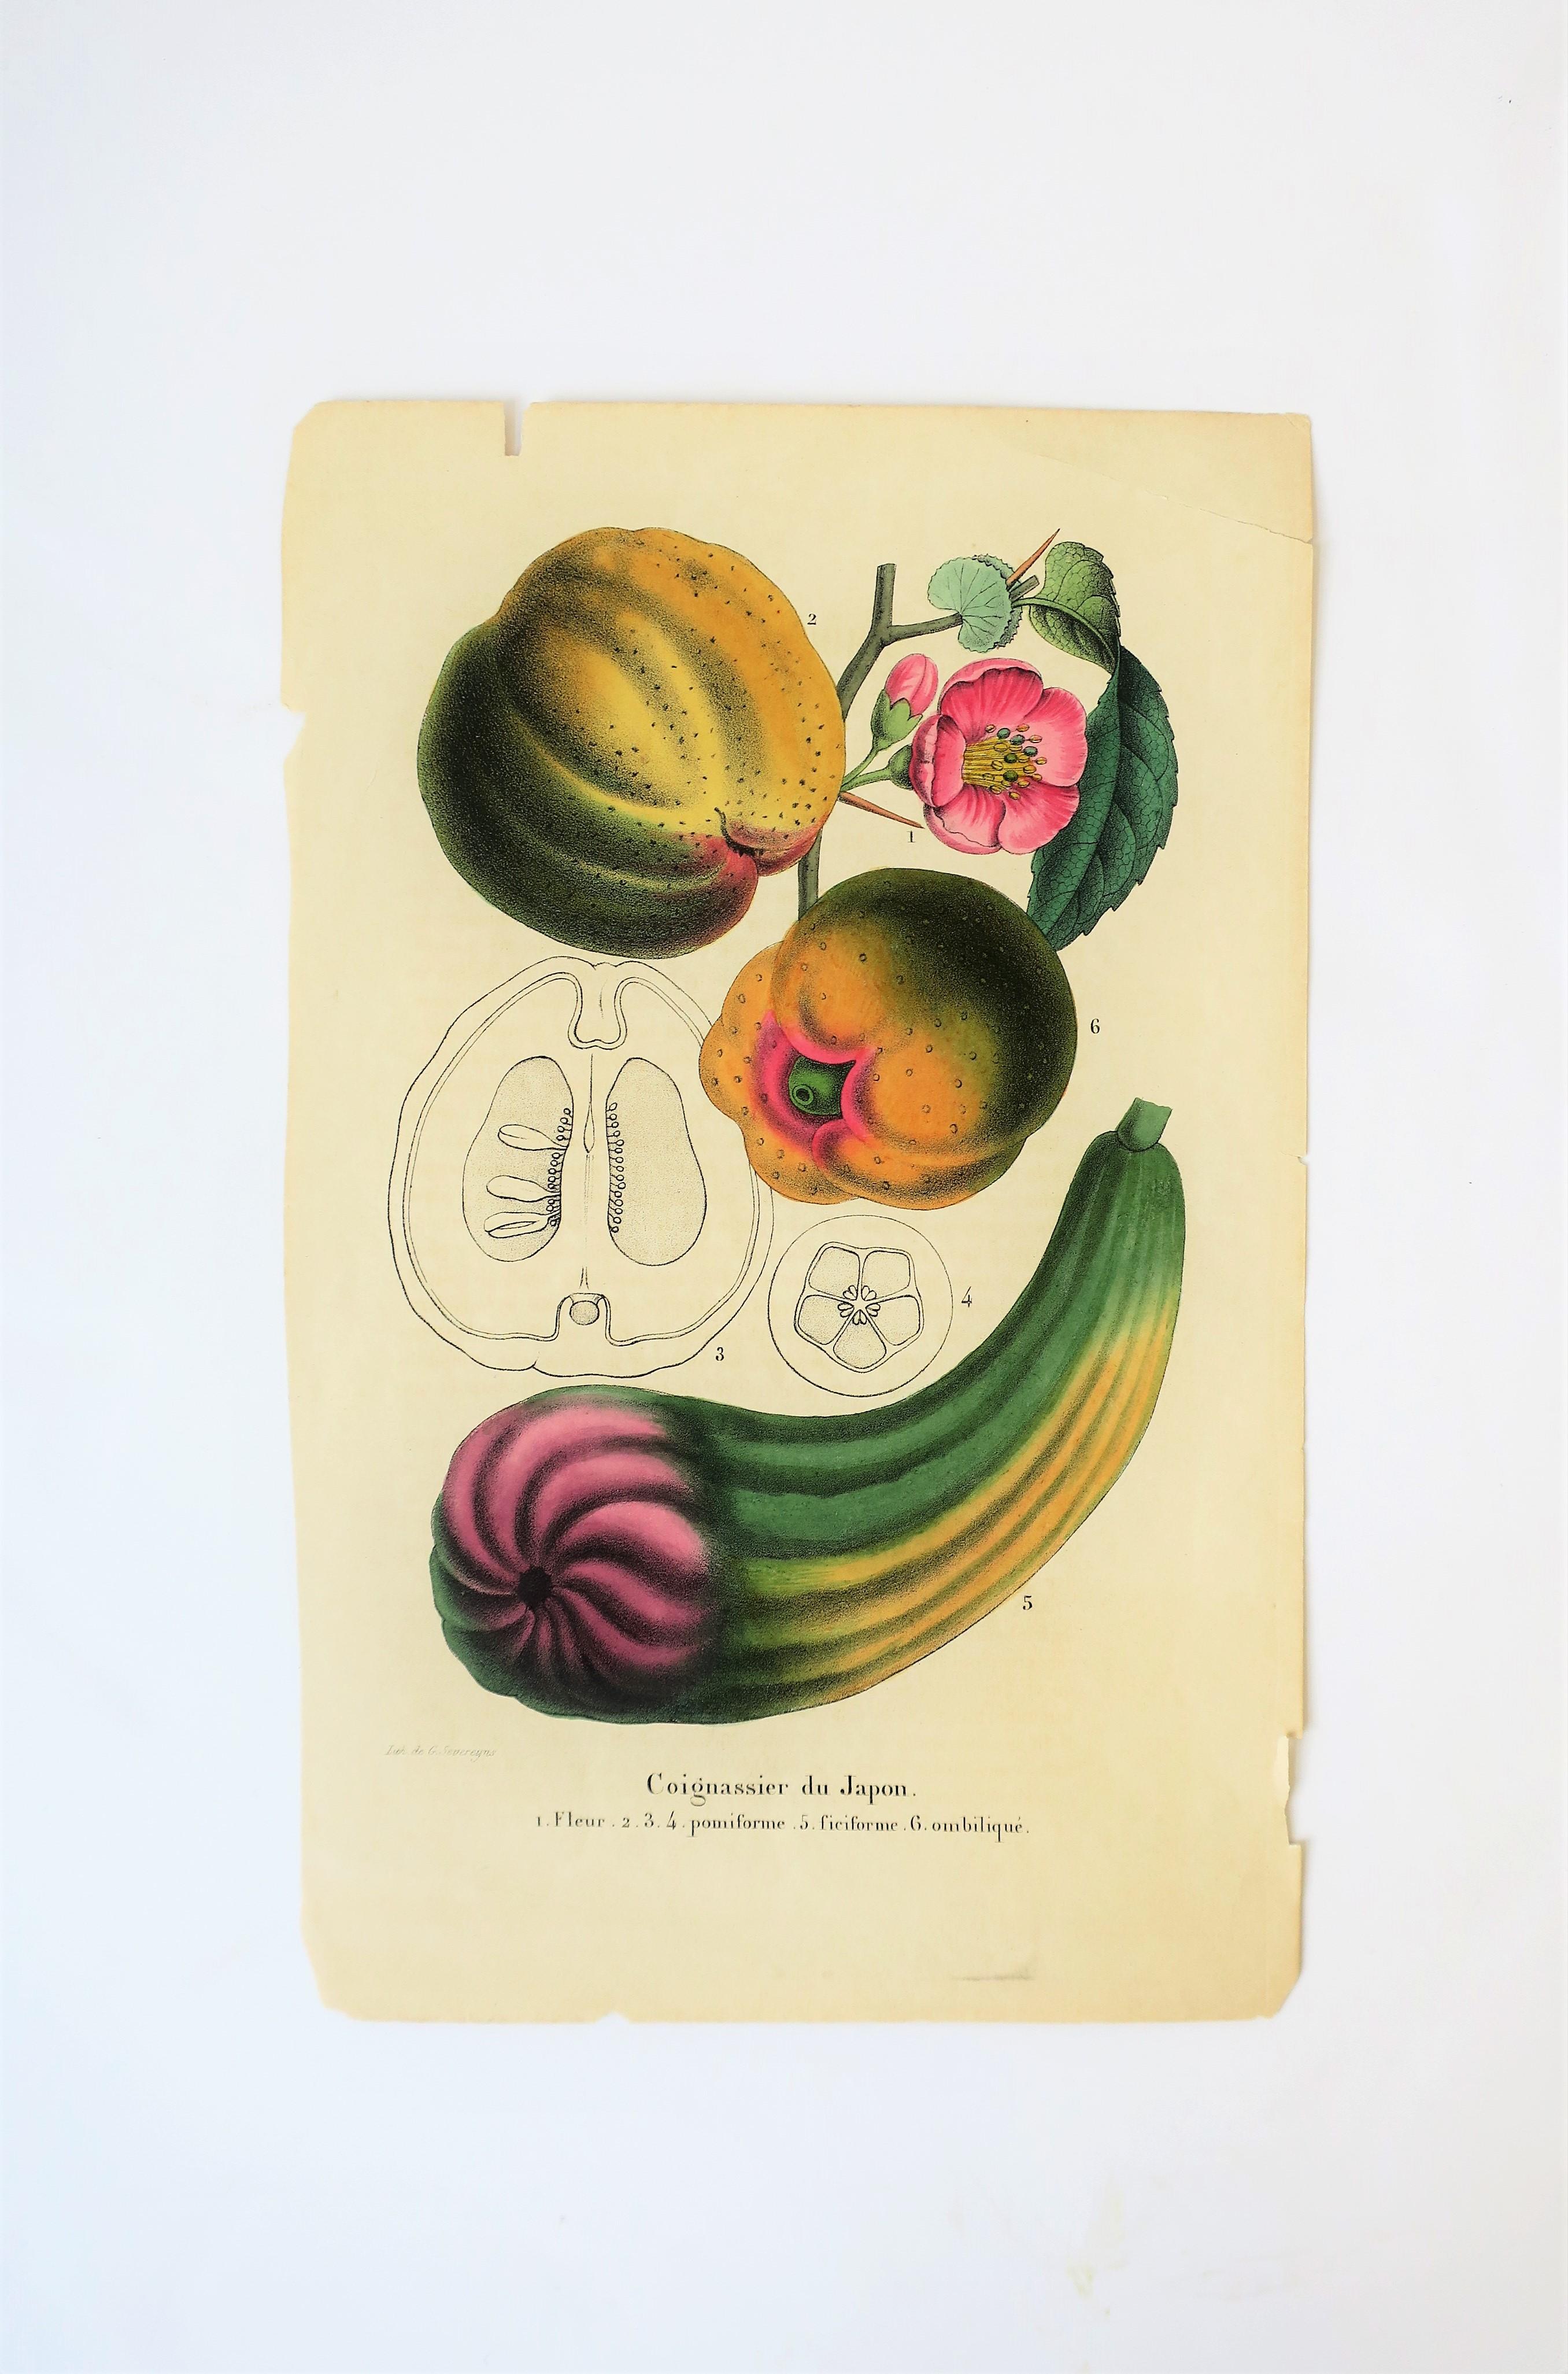 Pressed European Botanical Wall Art Prints, Late 19th Century